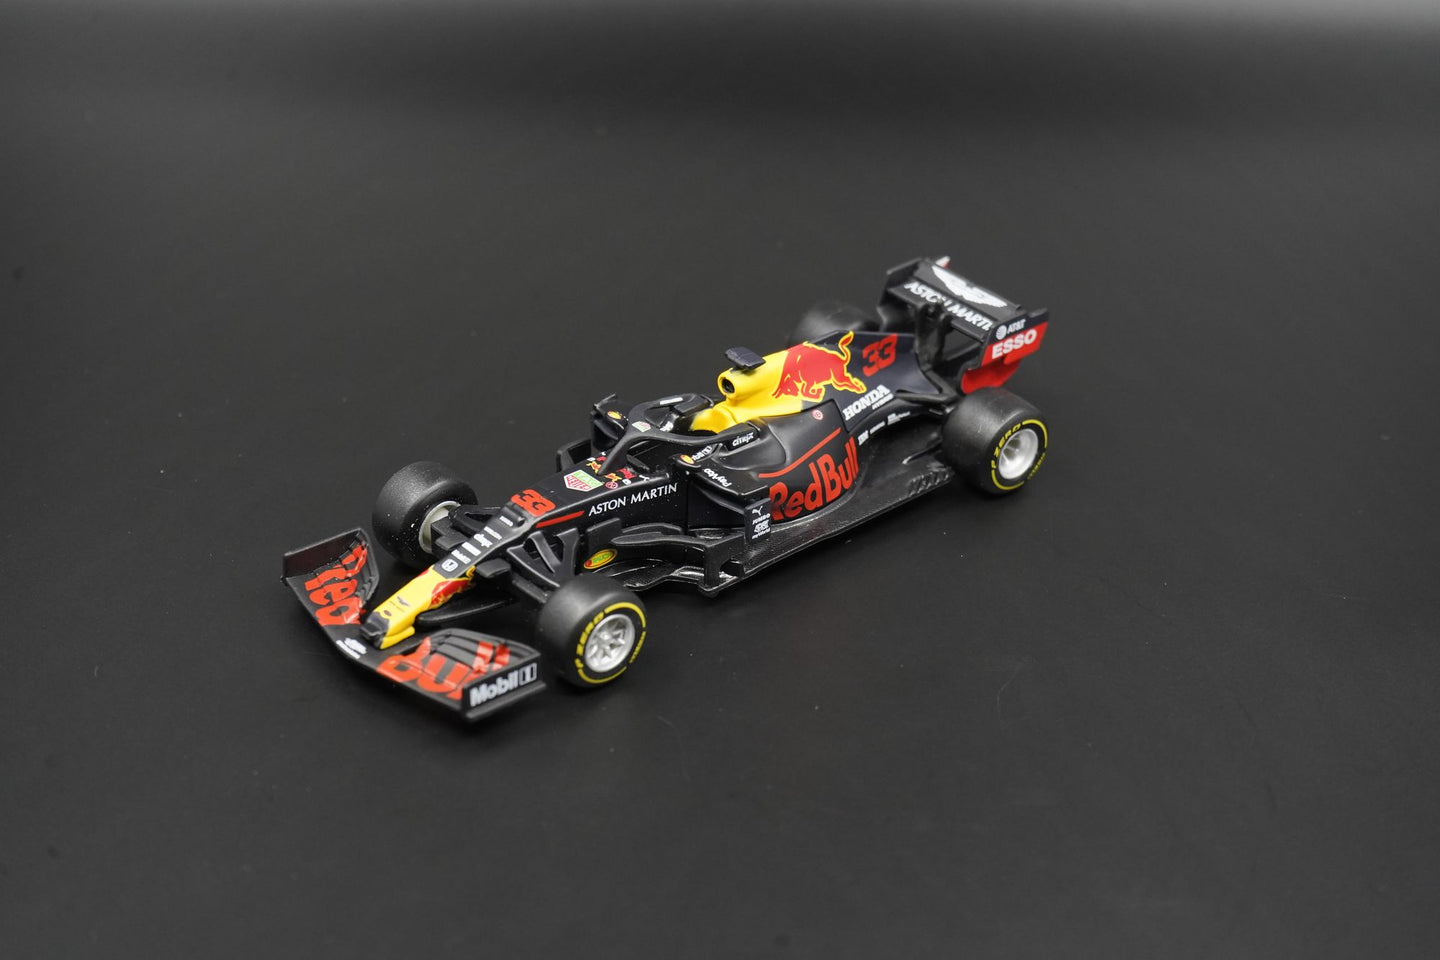 2020 Red Bull RB16 #33 Max Verstappen Formula Diecast Race Car Model 1:43 by Bburago